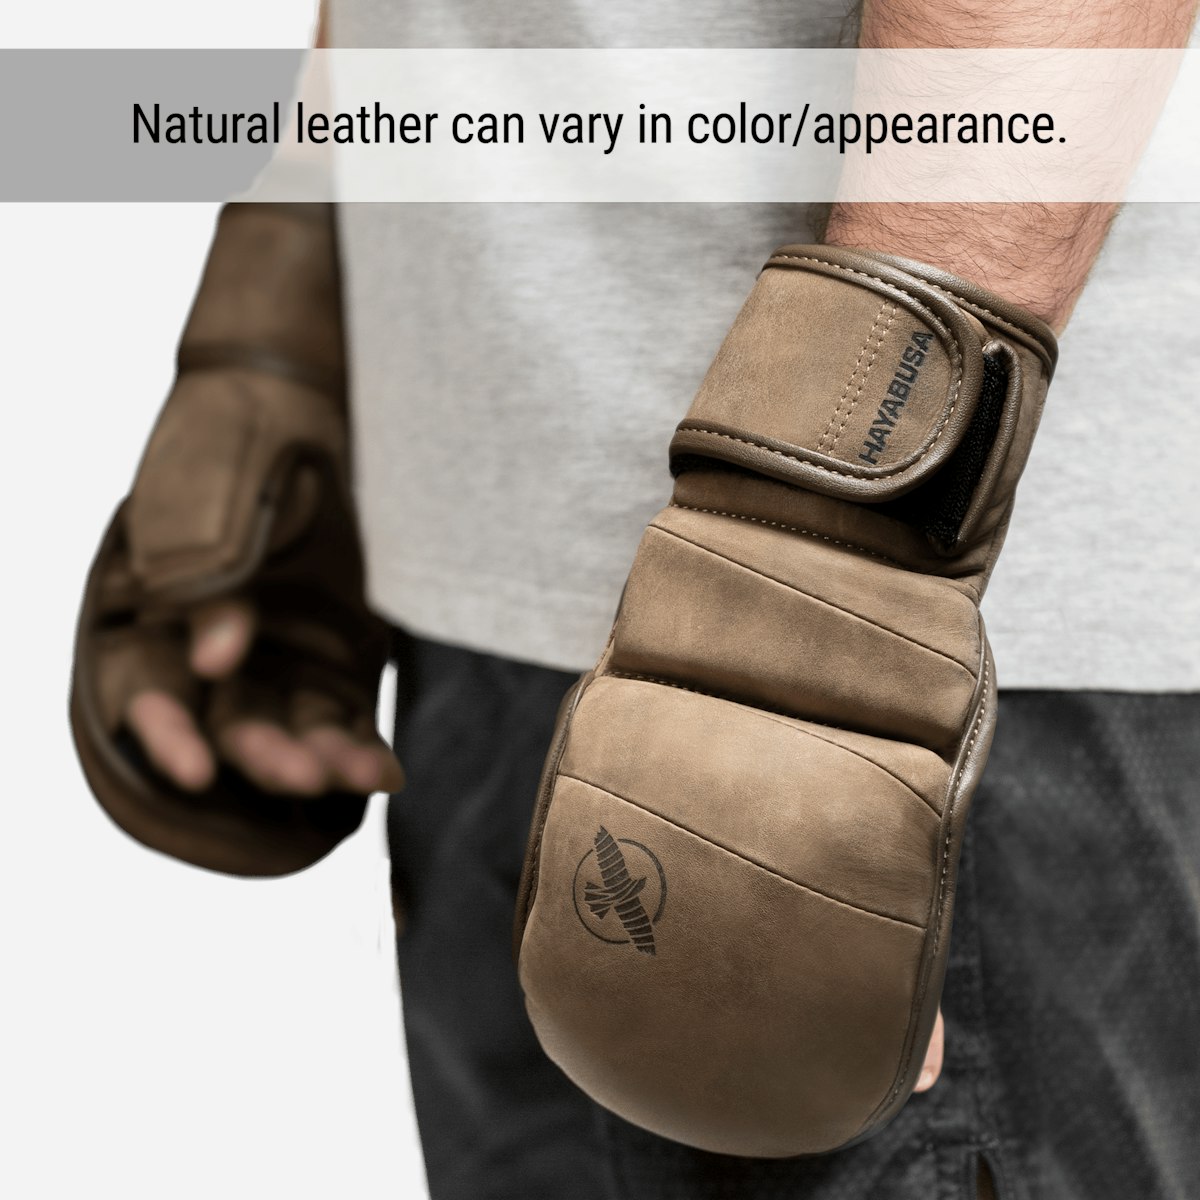 Hayabusa T3 LX 7oz Hybrid Gloves | MMA Training Gloves • Hayabusa 